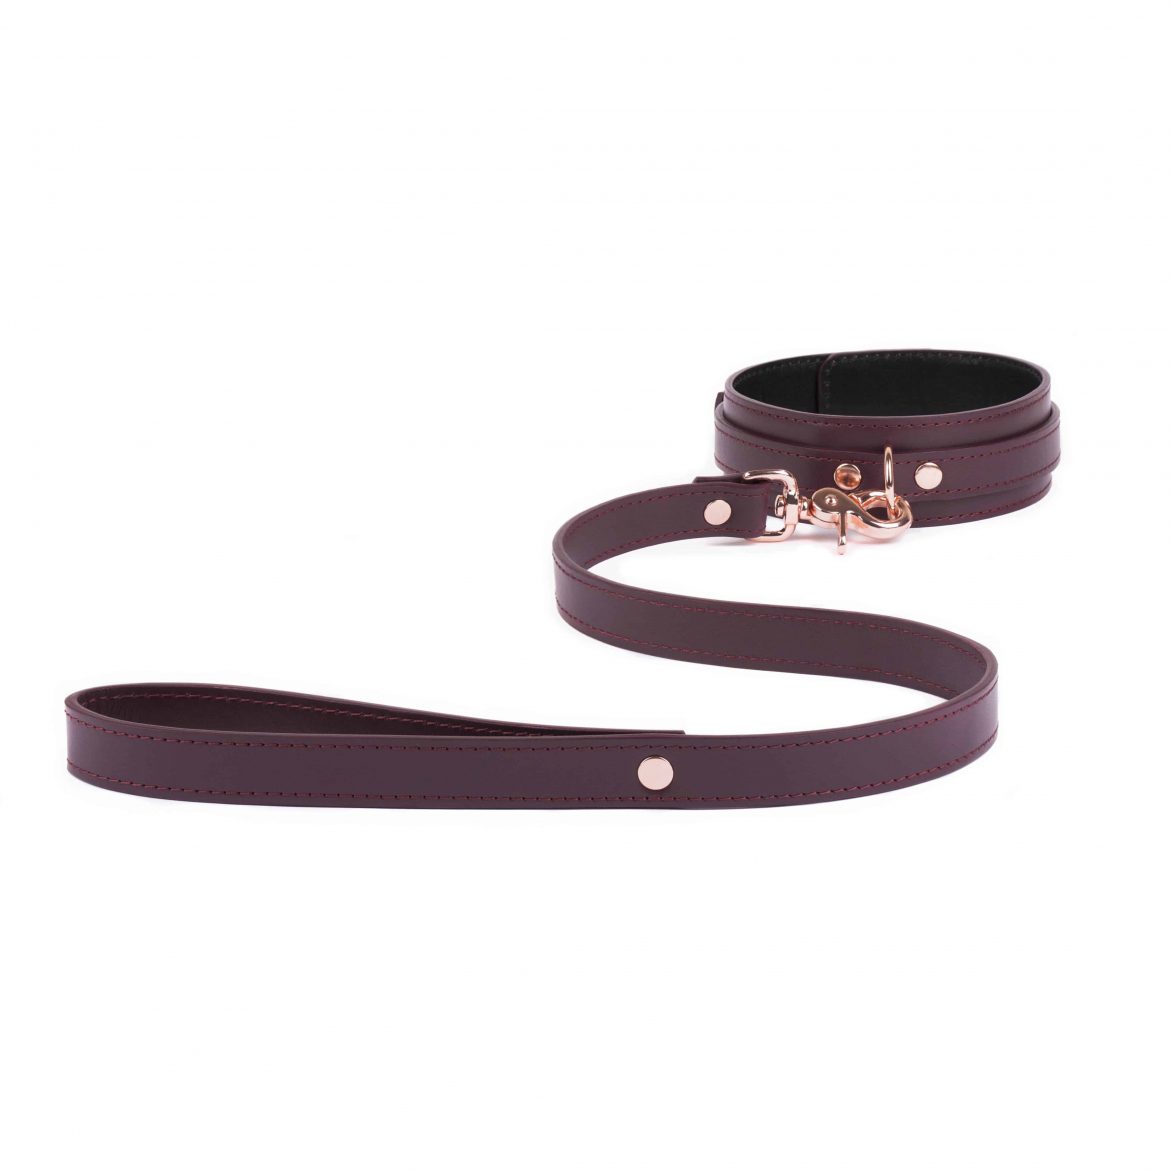 BDSM leather Bondage set collar and chain leash 22 scaled